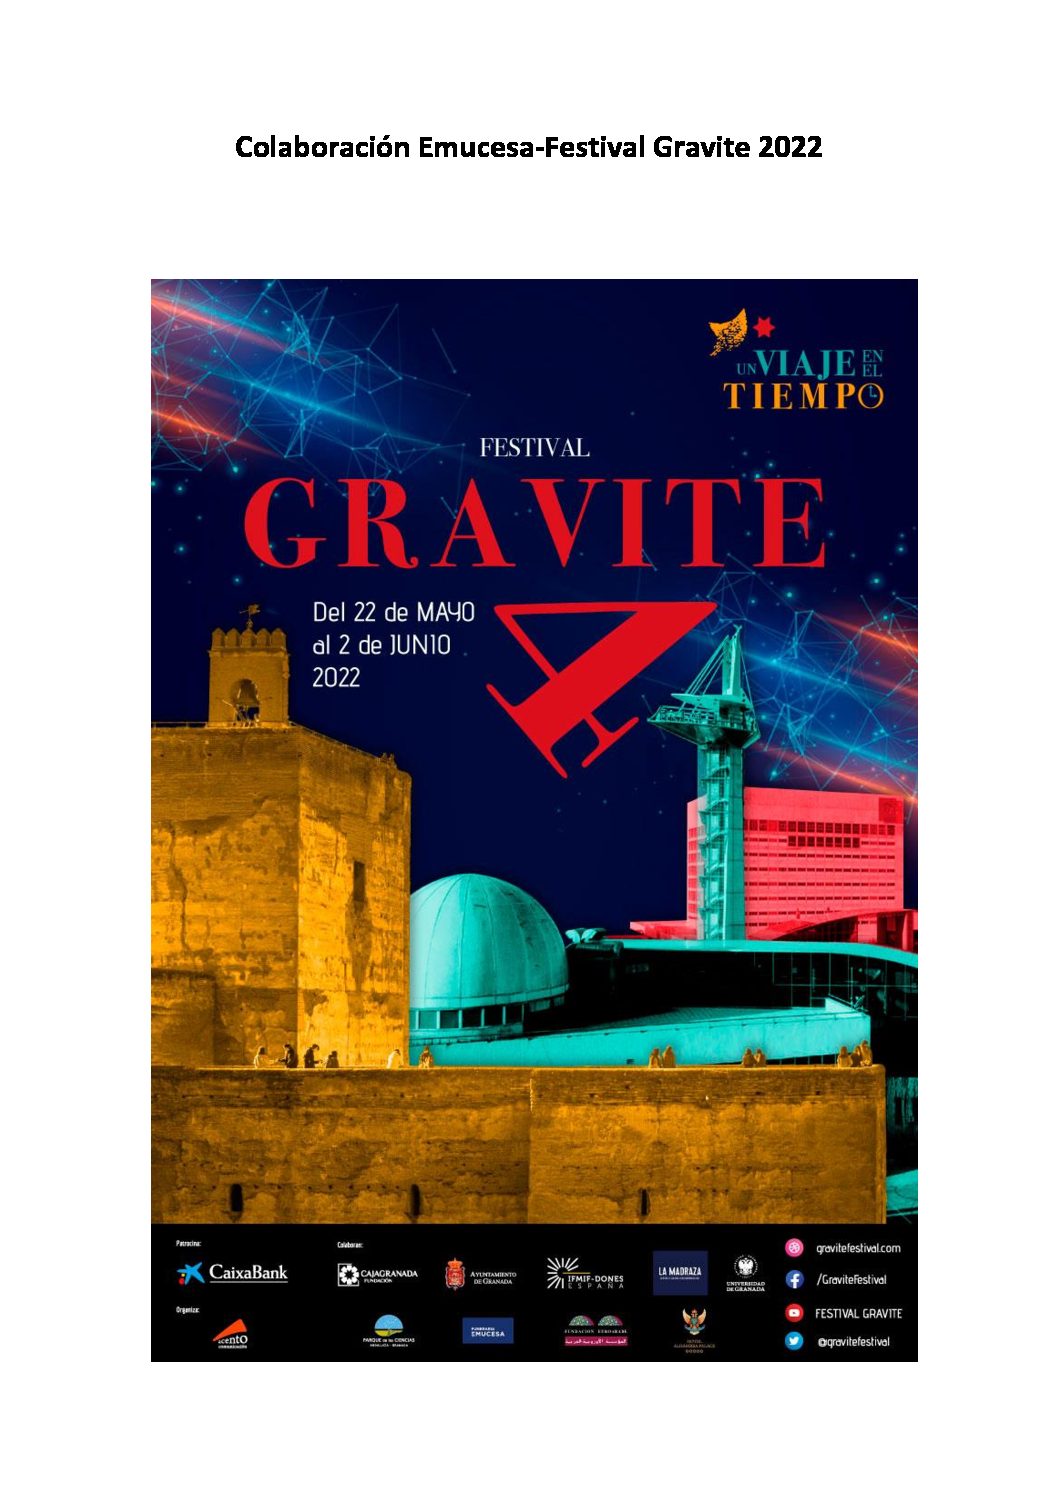 Imagen - Colaboración EMUCESA-festival Gravite. Año 2022